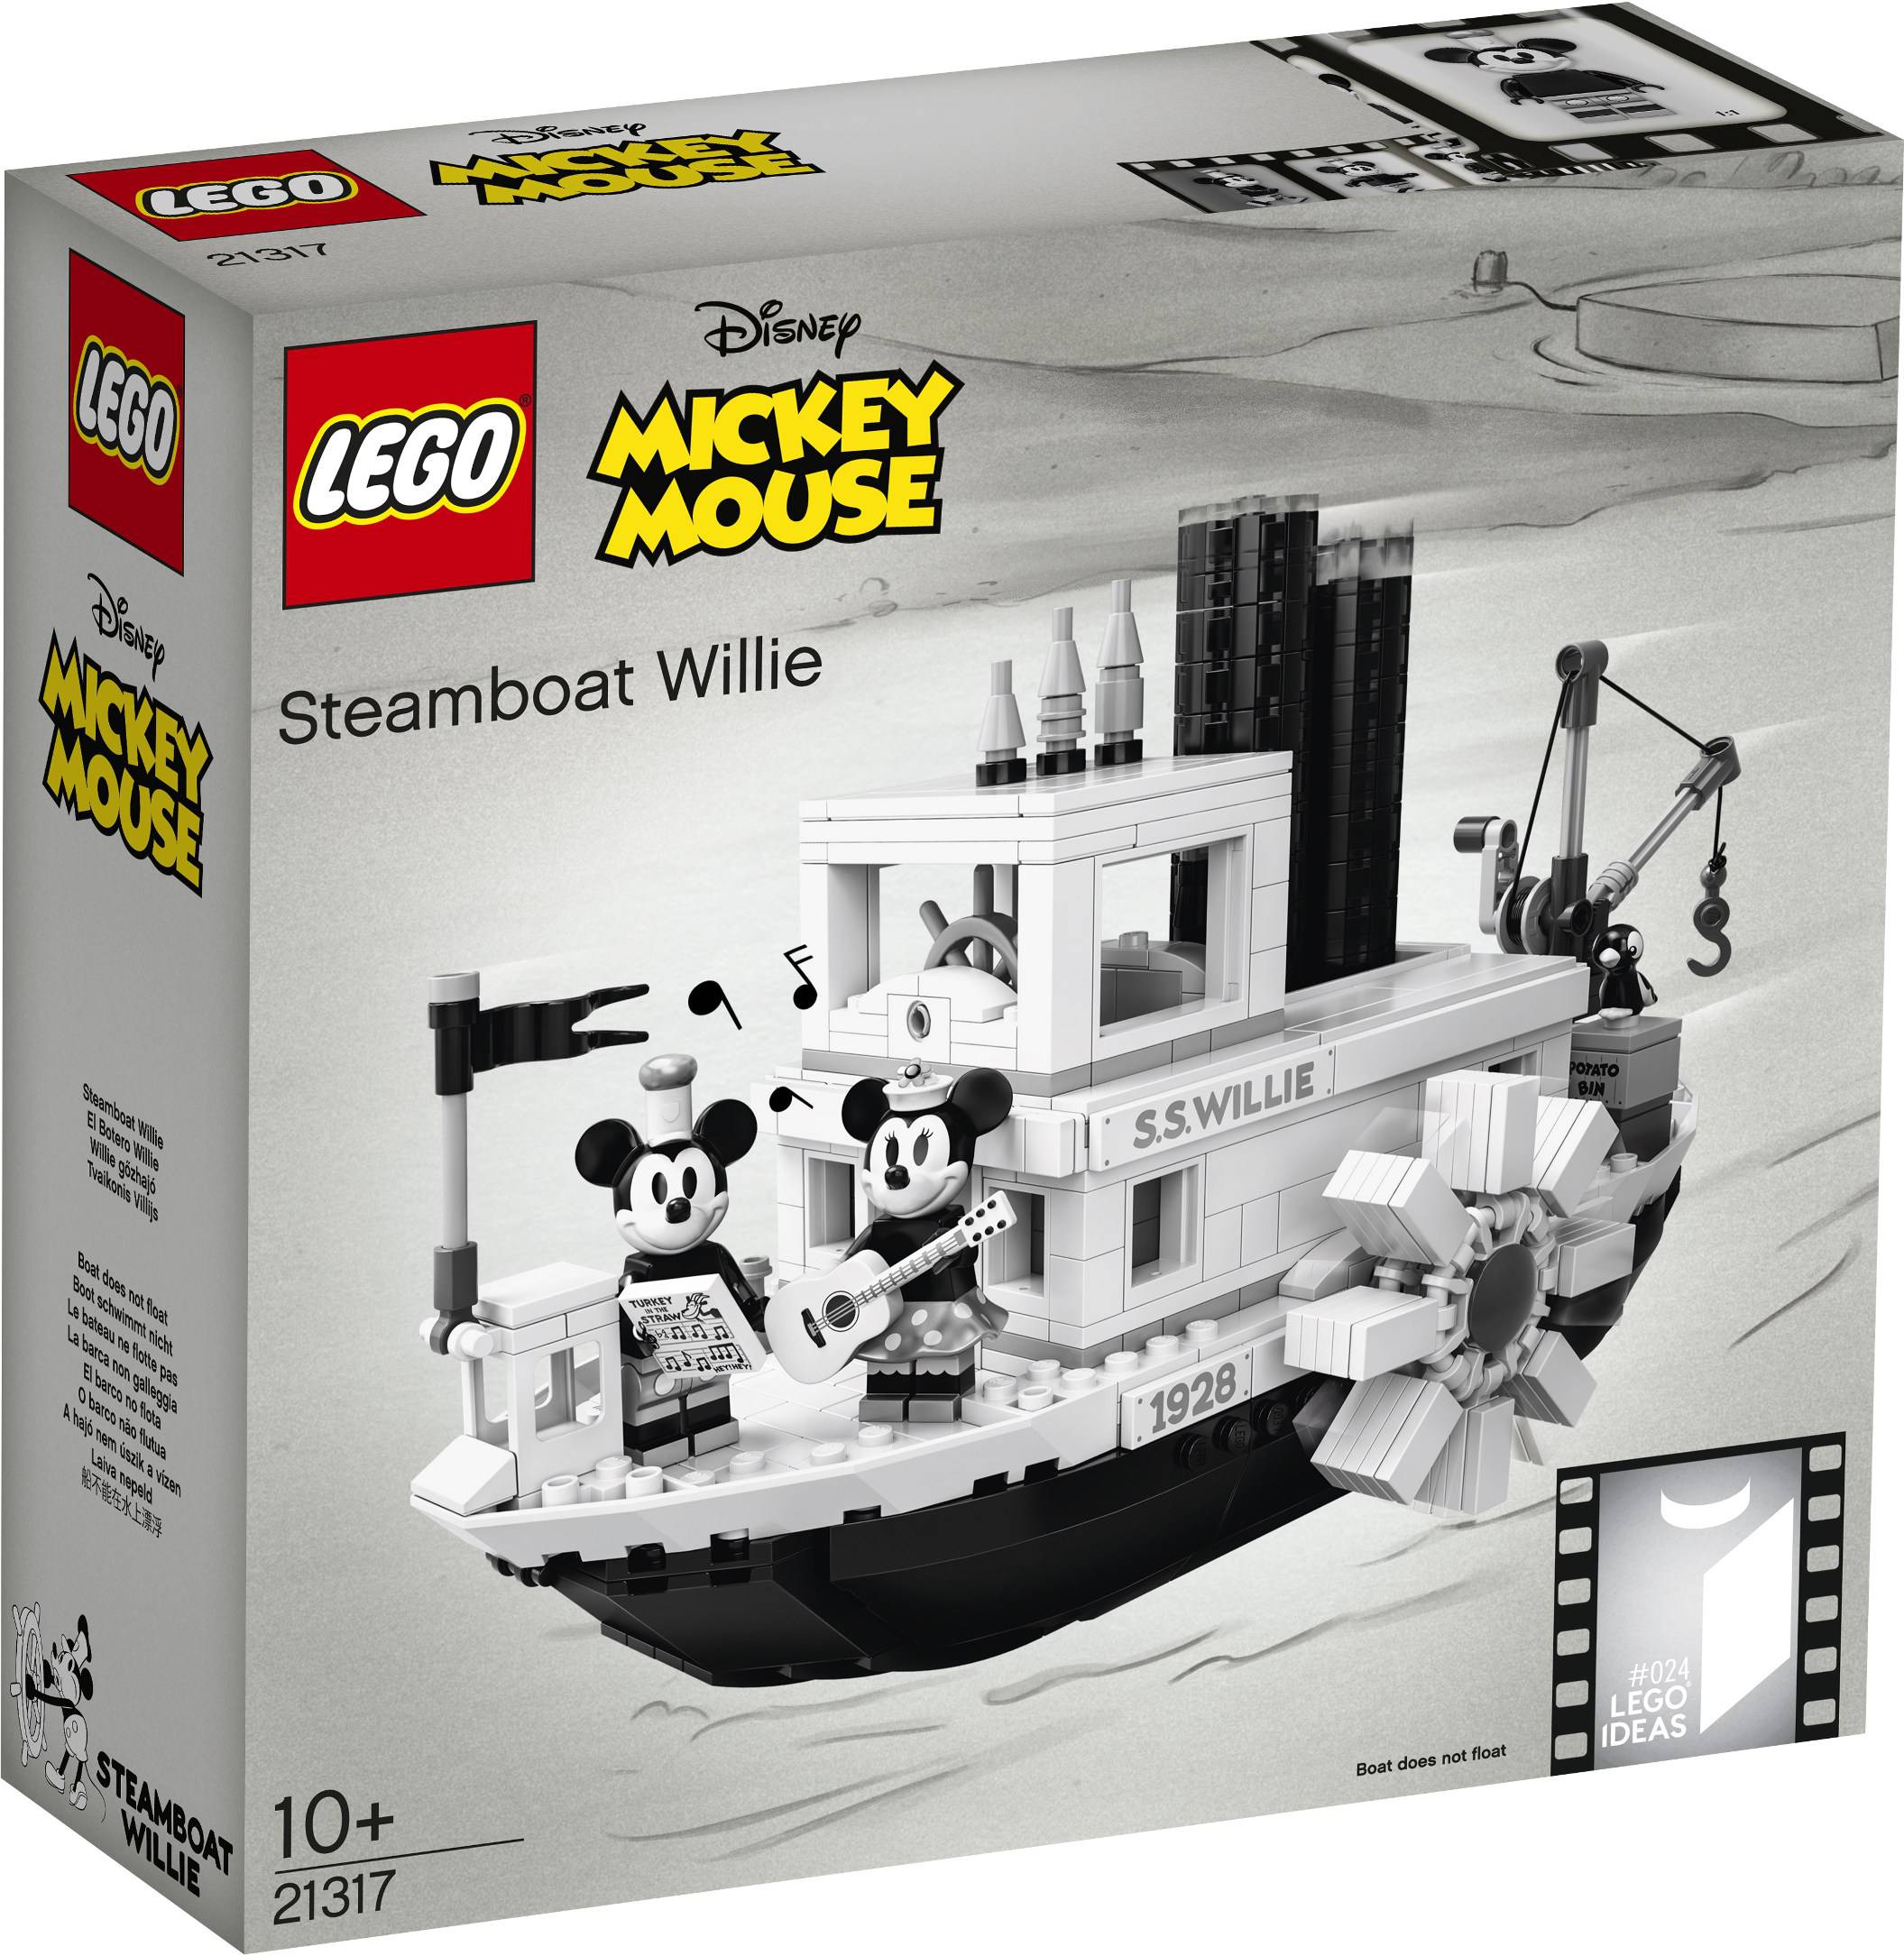 LEGO Ideas - Steamboat Willie - 21317 - Photo 1/1